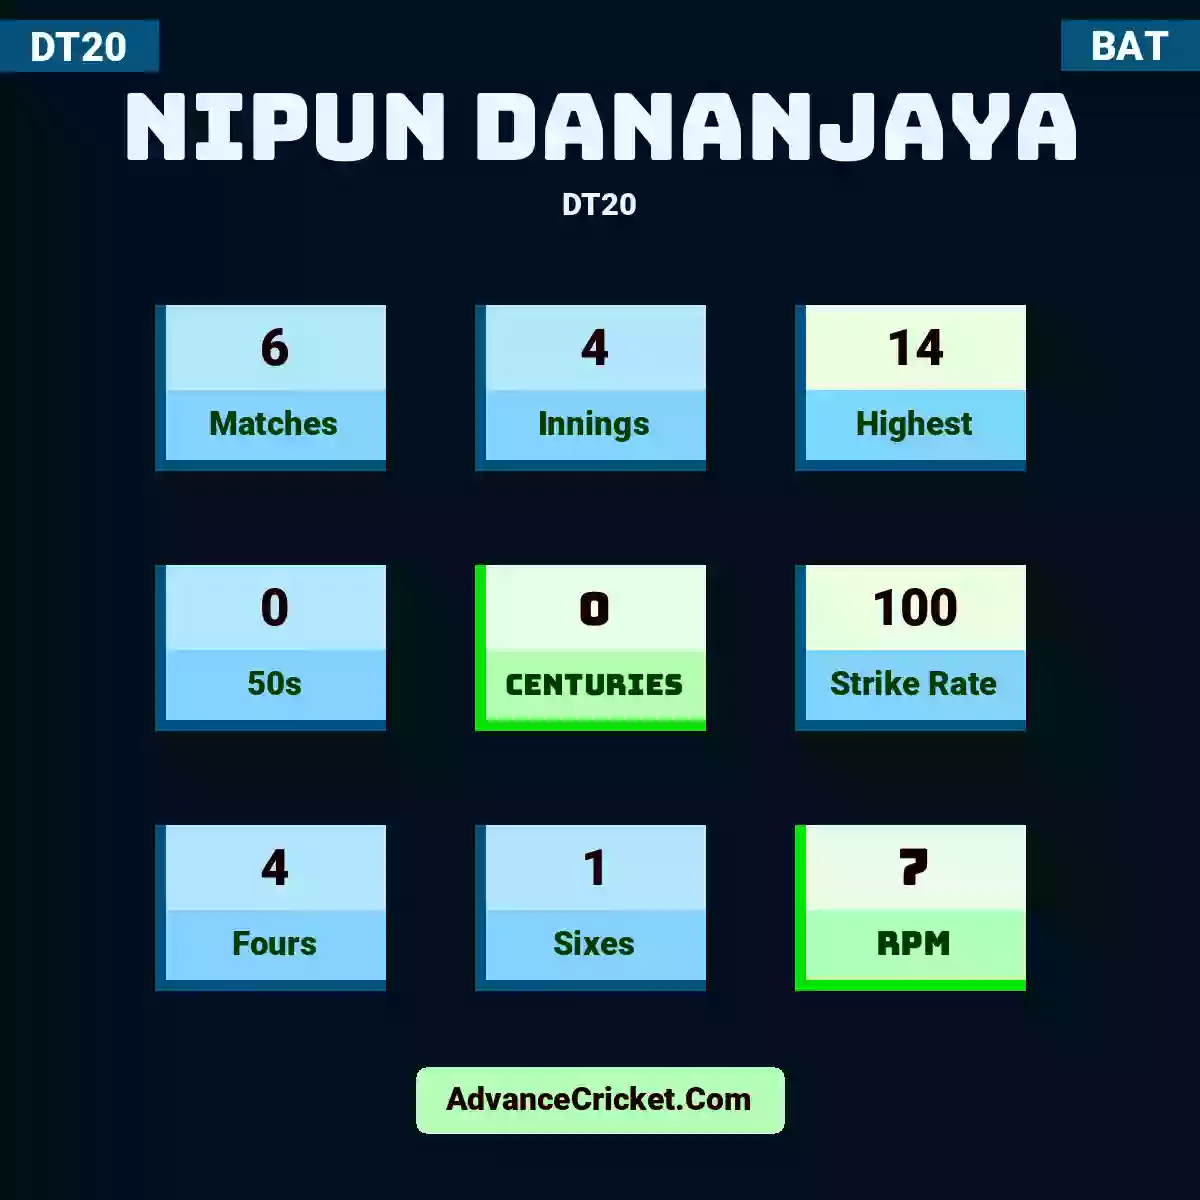 Nipun Dananjaya DT20 , Nipun Dananjaya played 6 matches, scored 14 runs as highest, 0 half-centuries, and 0 centuries, with a strike rate of 100. N.Dananjaya hit 4 fours and 1 sixes, with an RPM of 7.